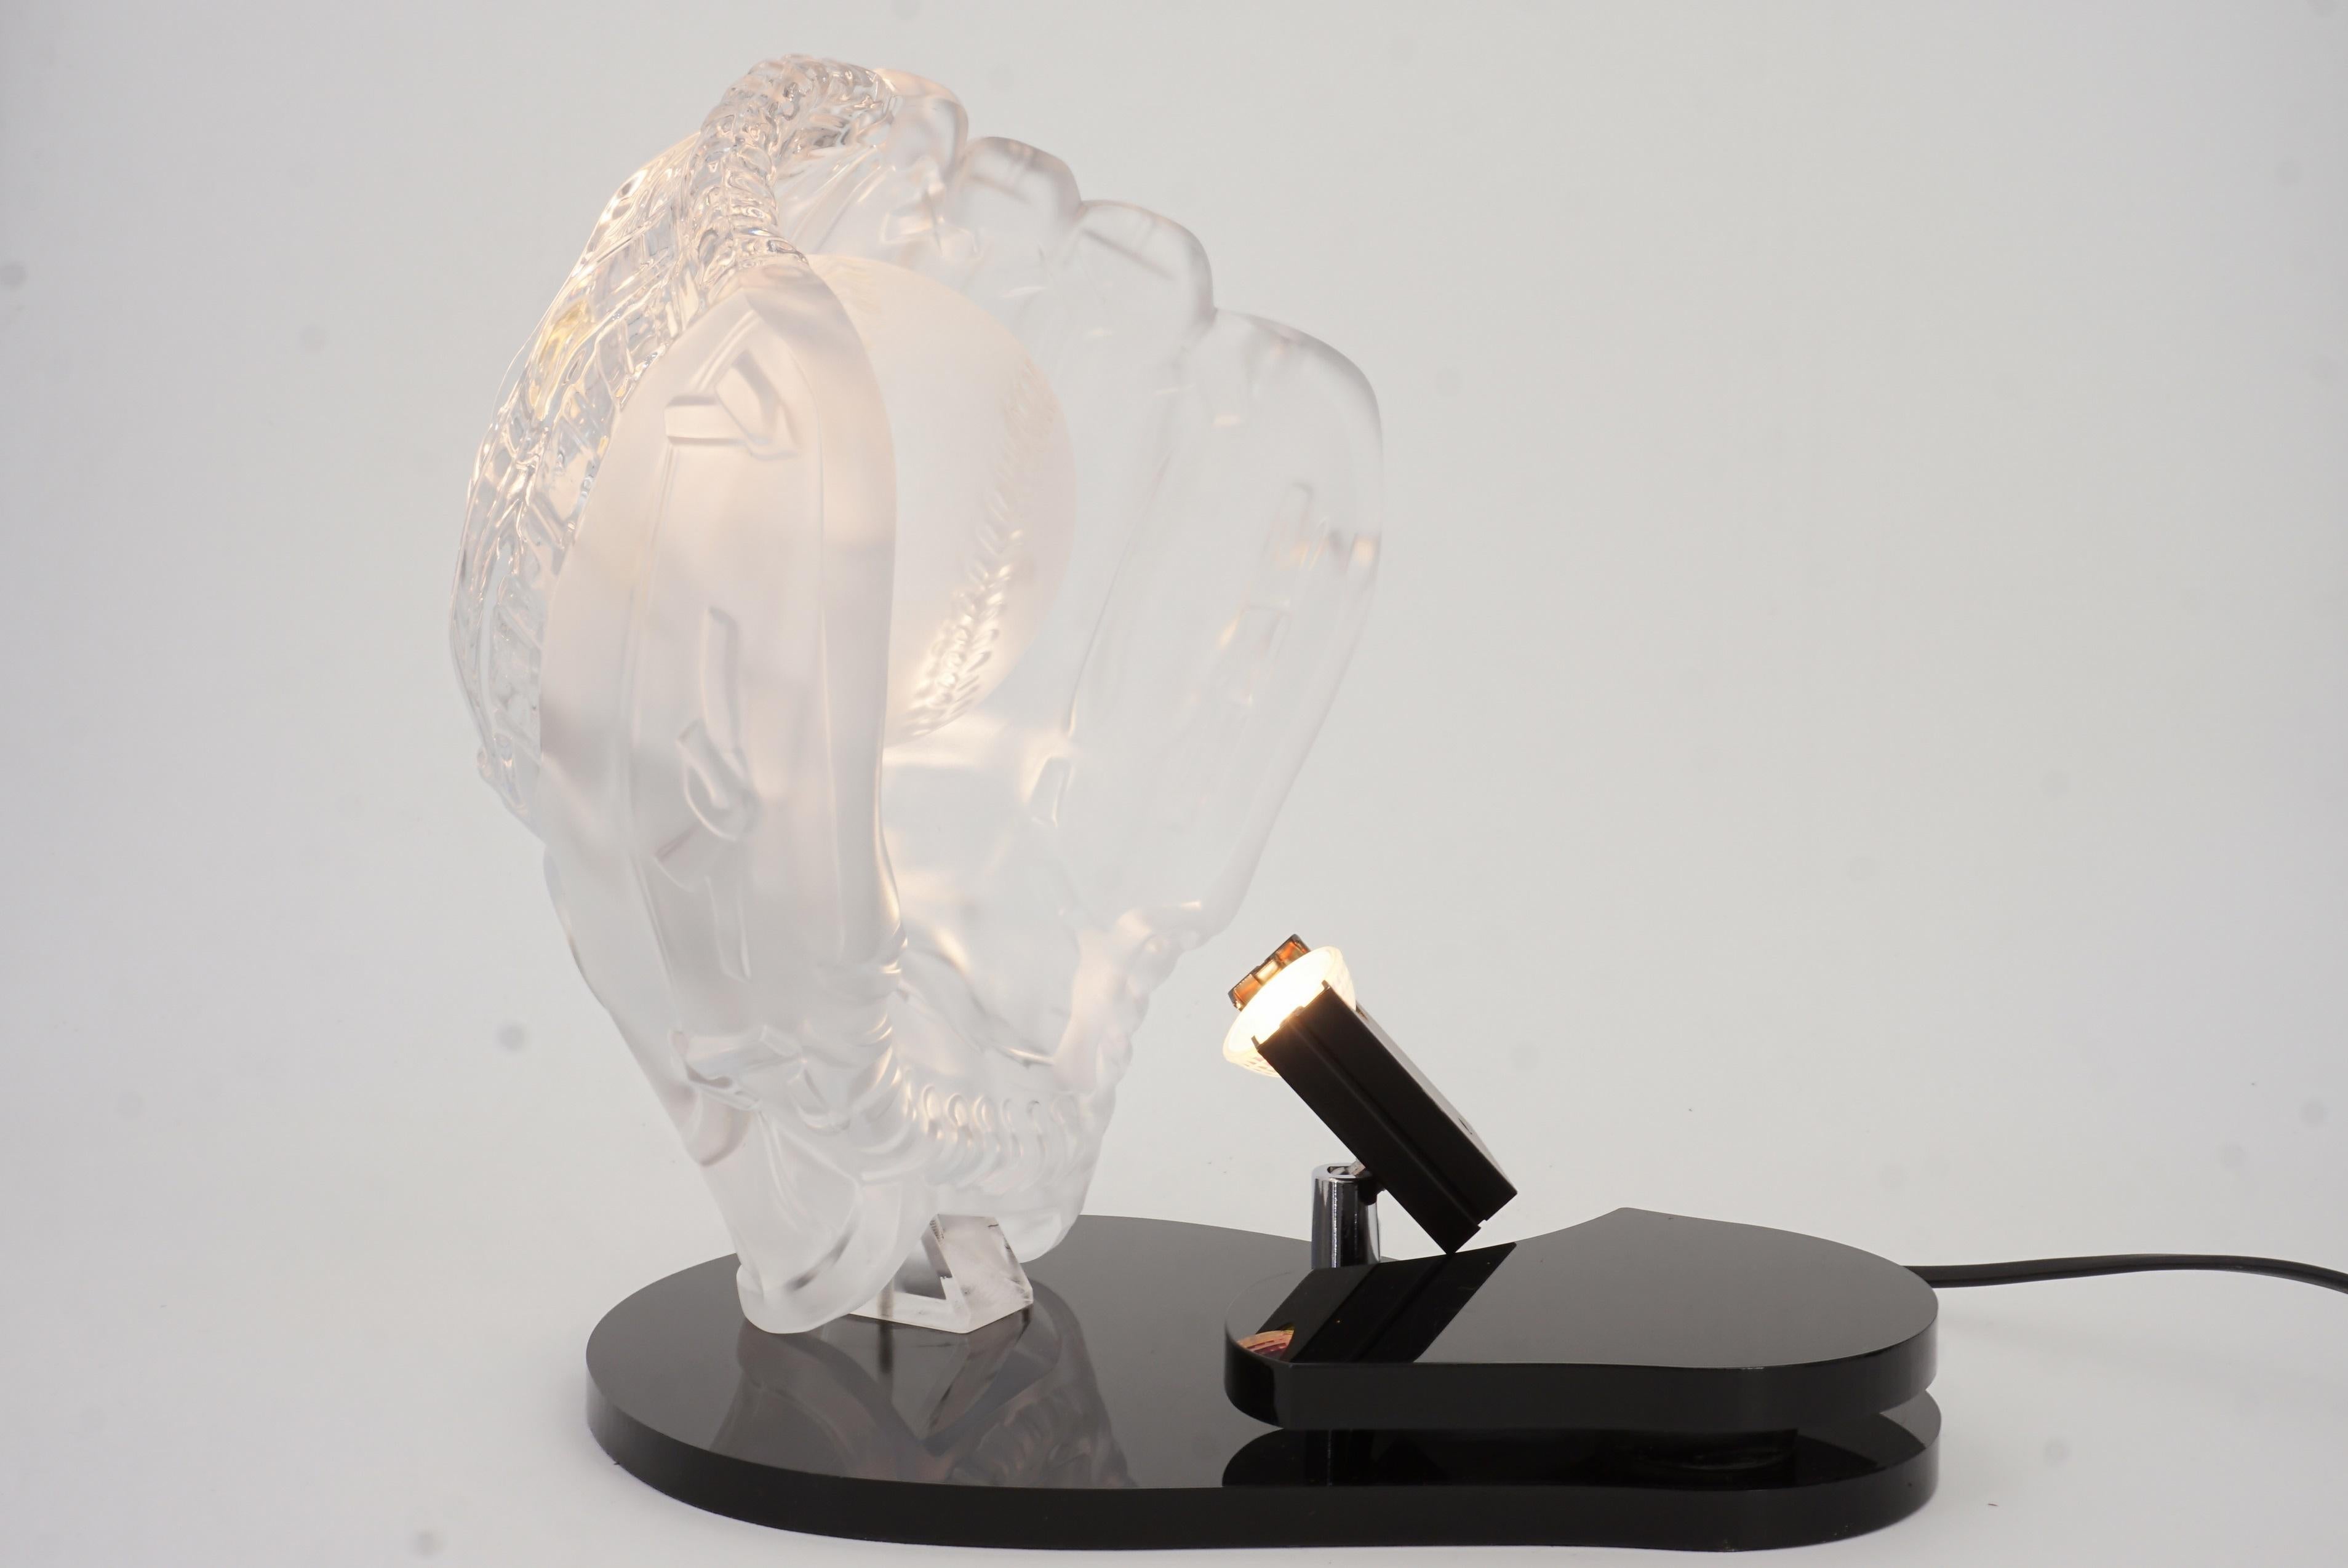 Crystal baseball design lamp.